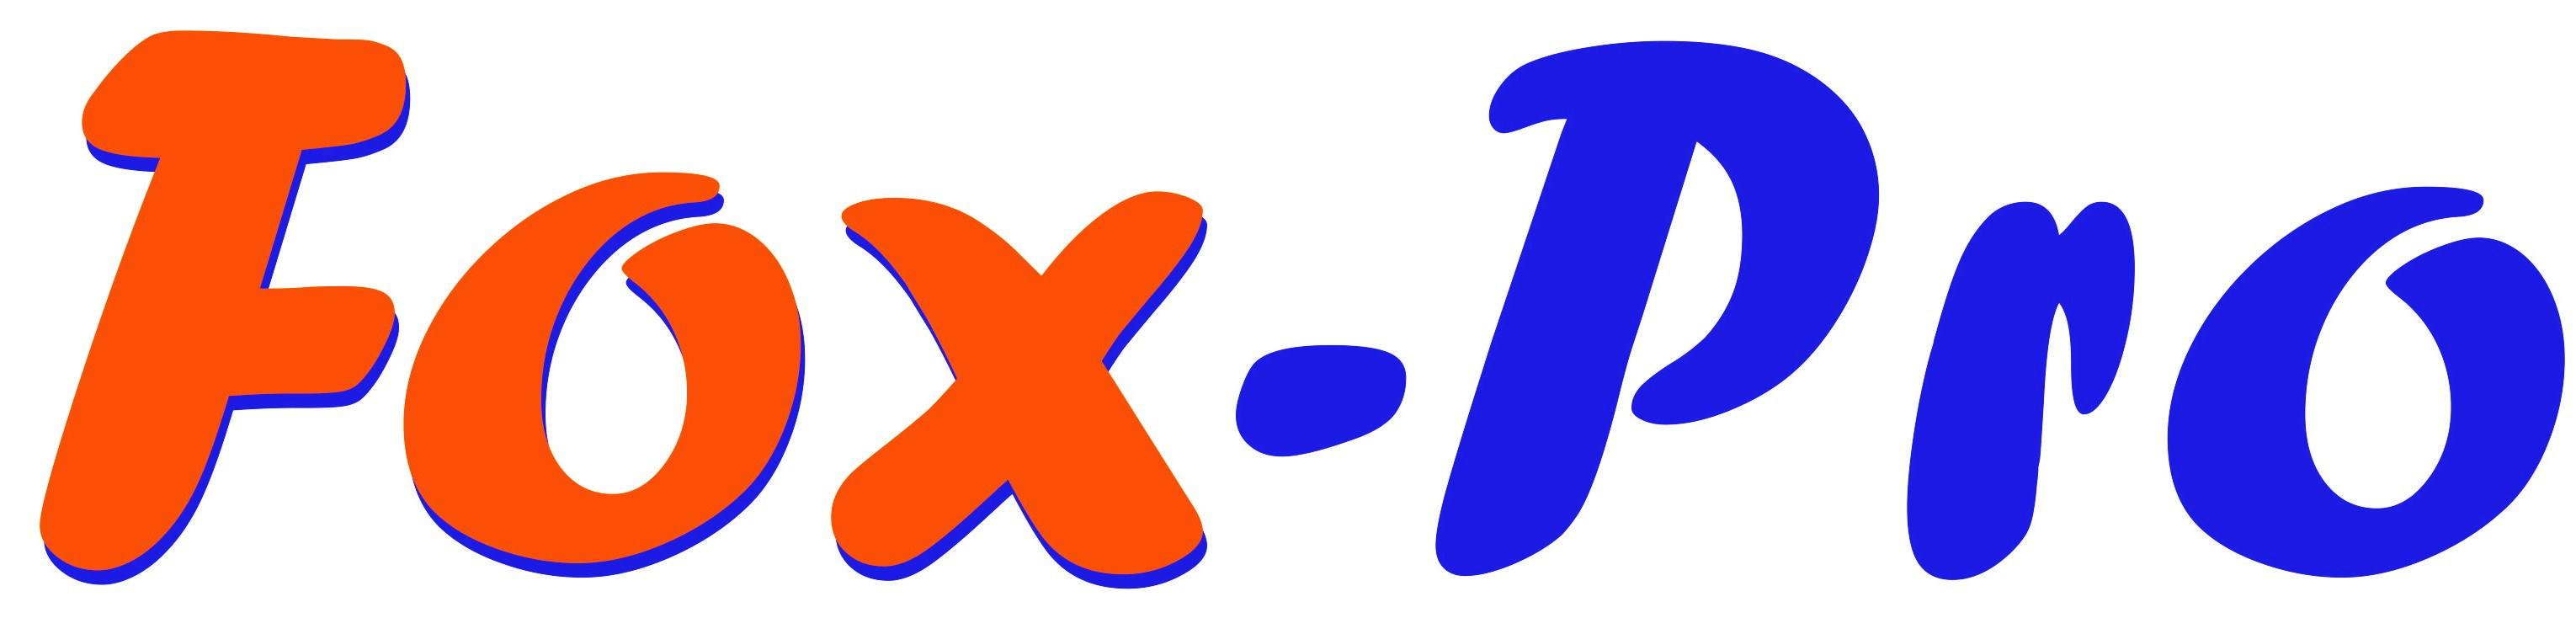 Фирма fox. FOXPRO логотип. Fox компания. ООО бизнес Фокс.